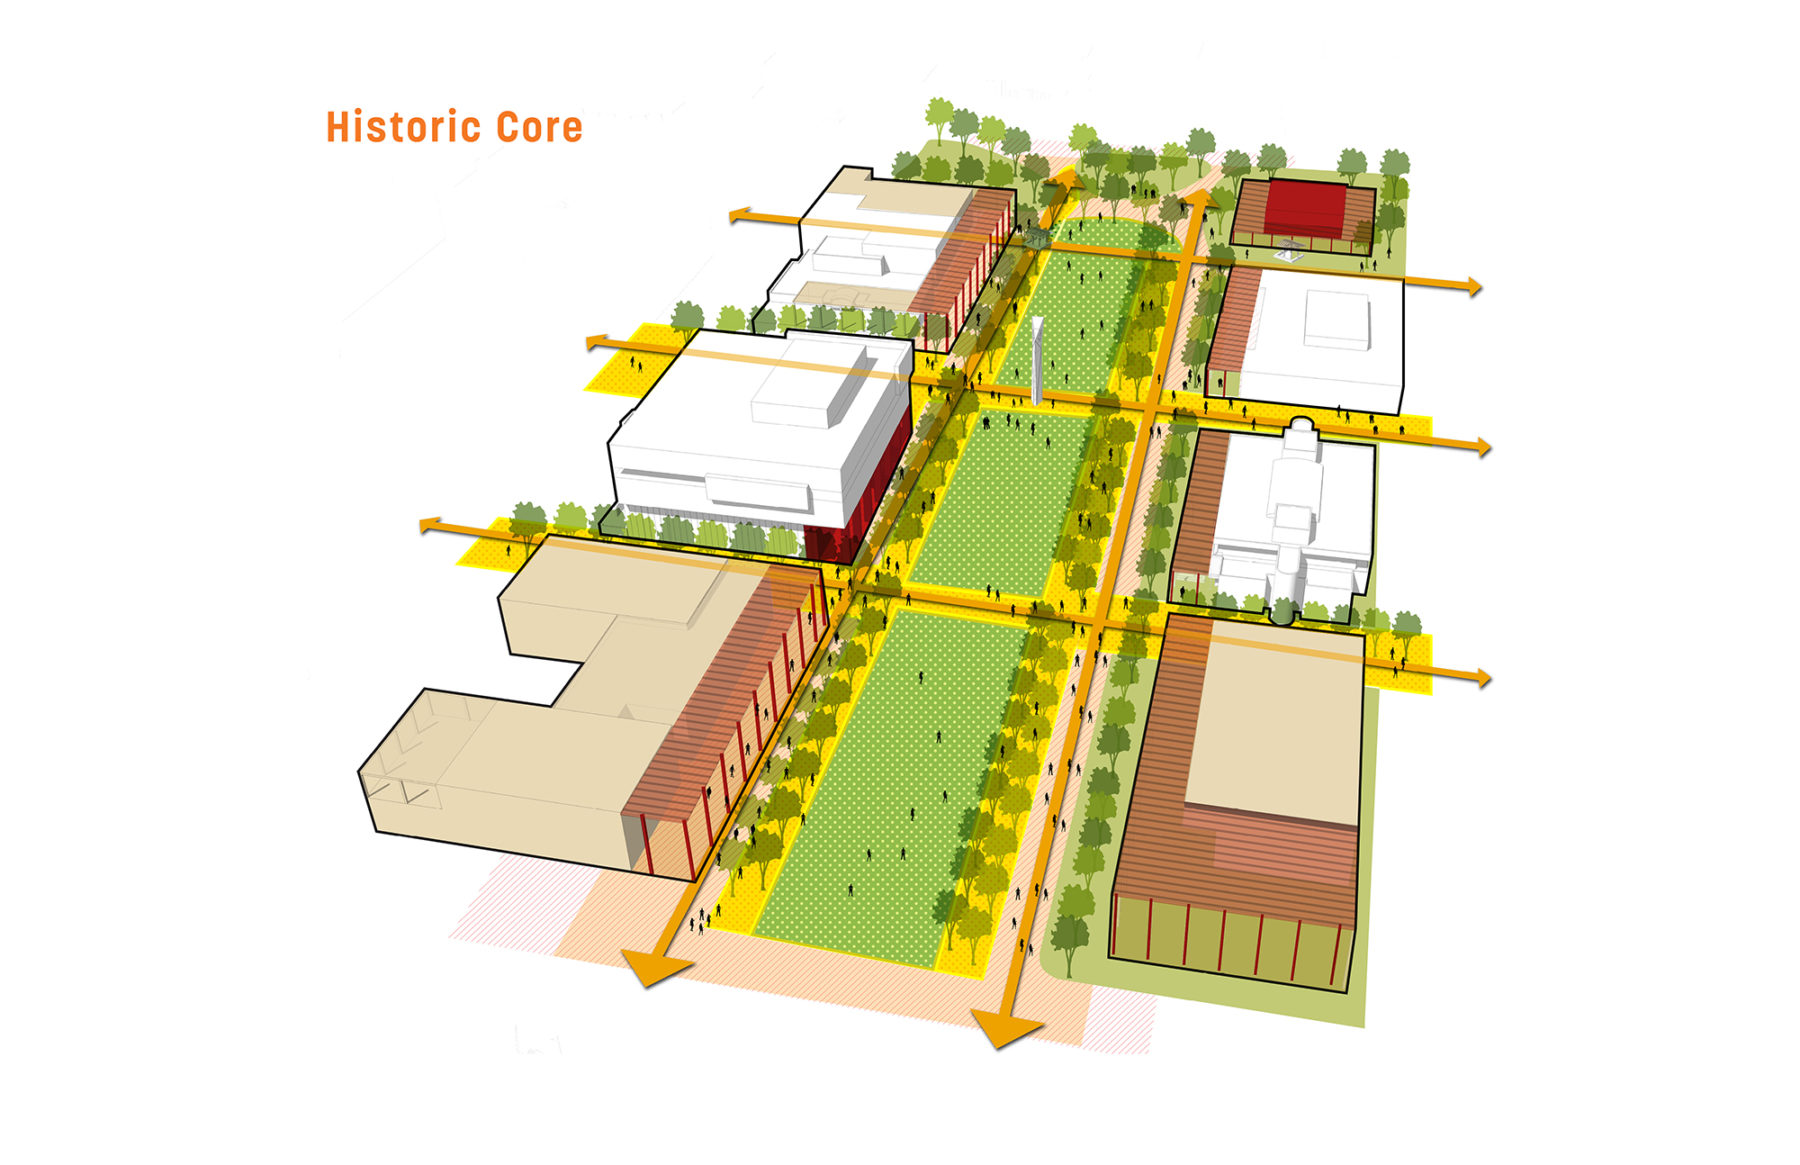 Historic core site plan